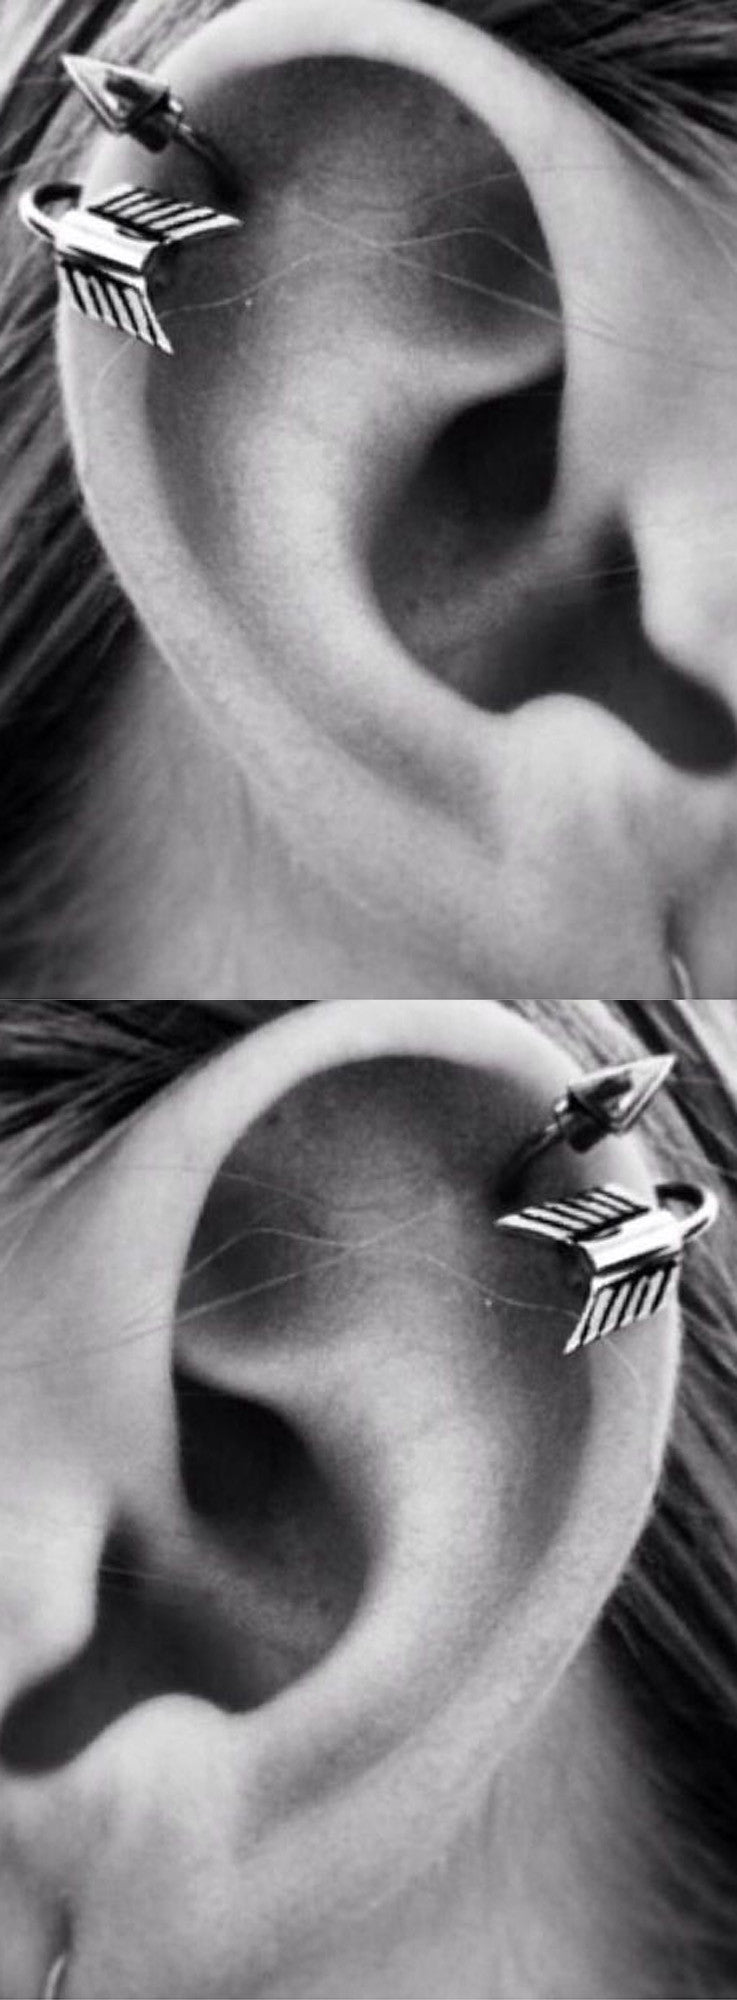 Creative Ear Piercing Ideas - All the Way Up Cartilage Piercing Hoop - Arrow Spiral Earring 16G 